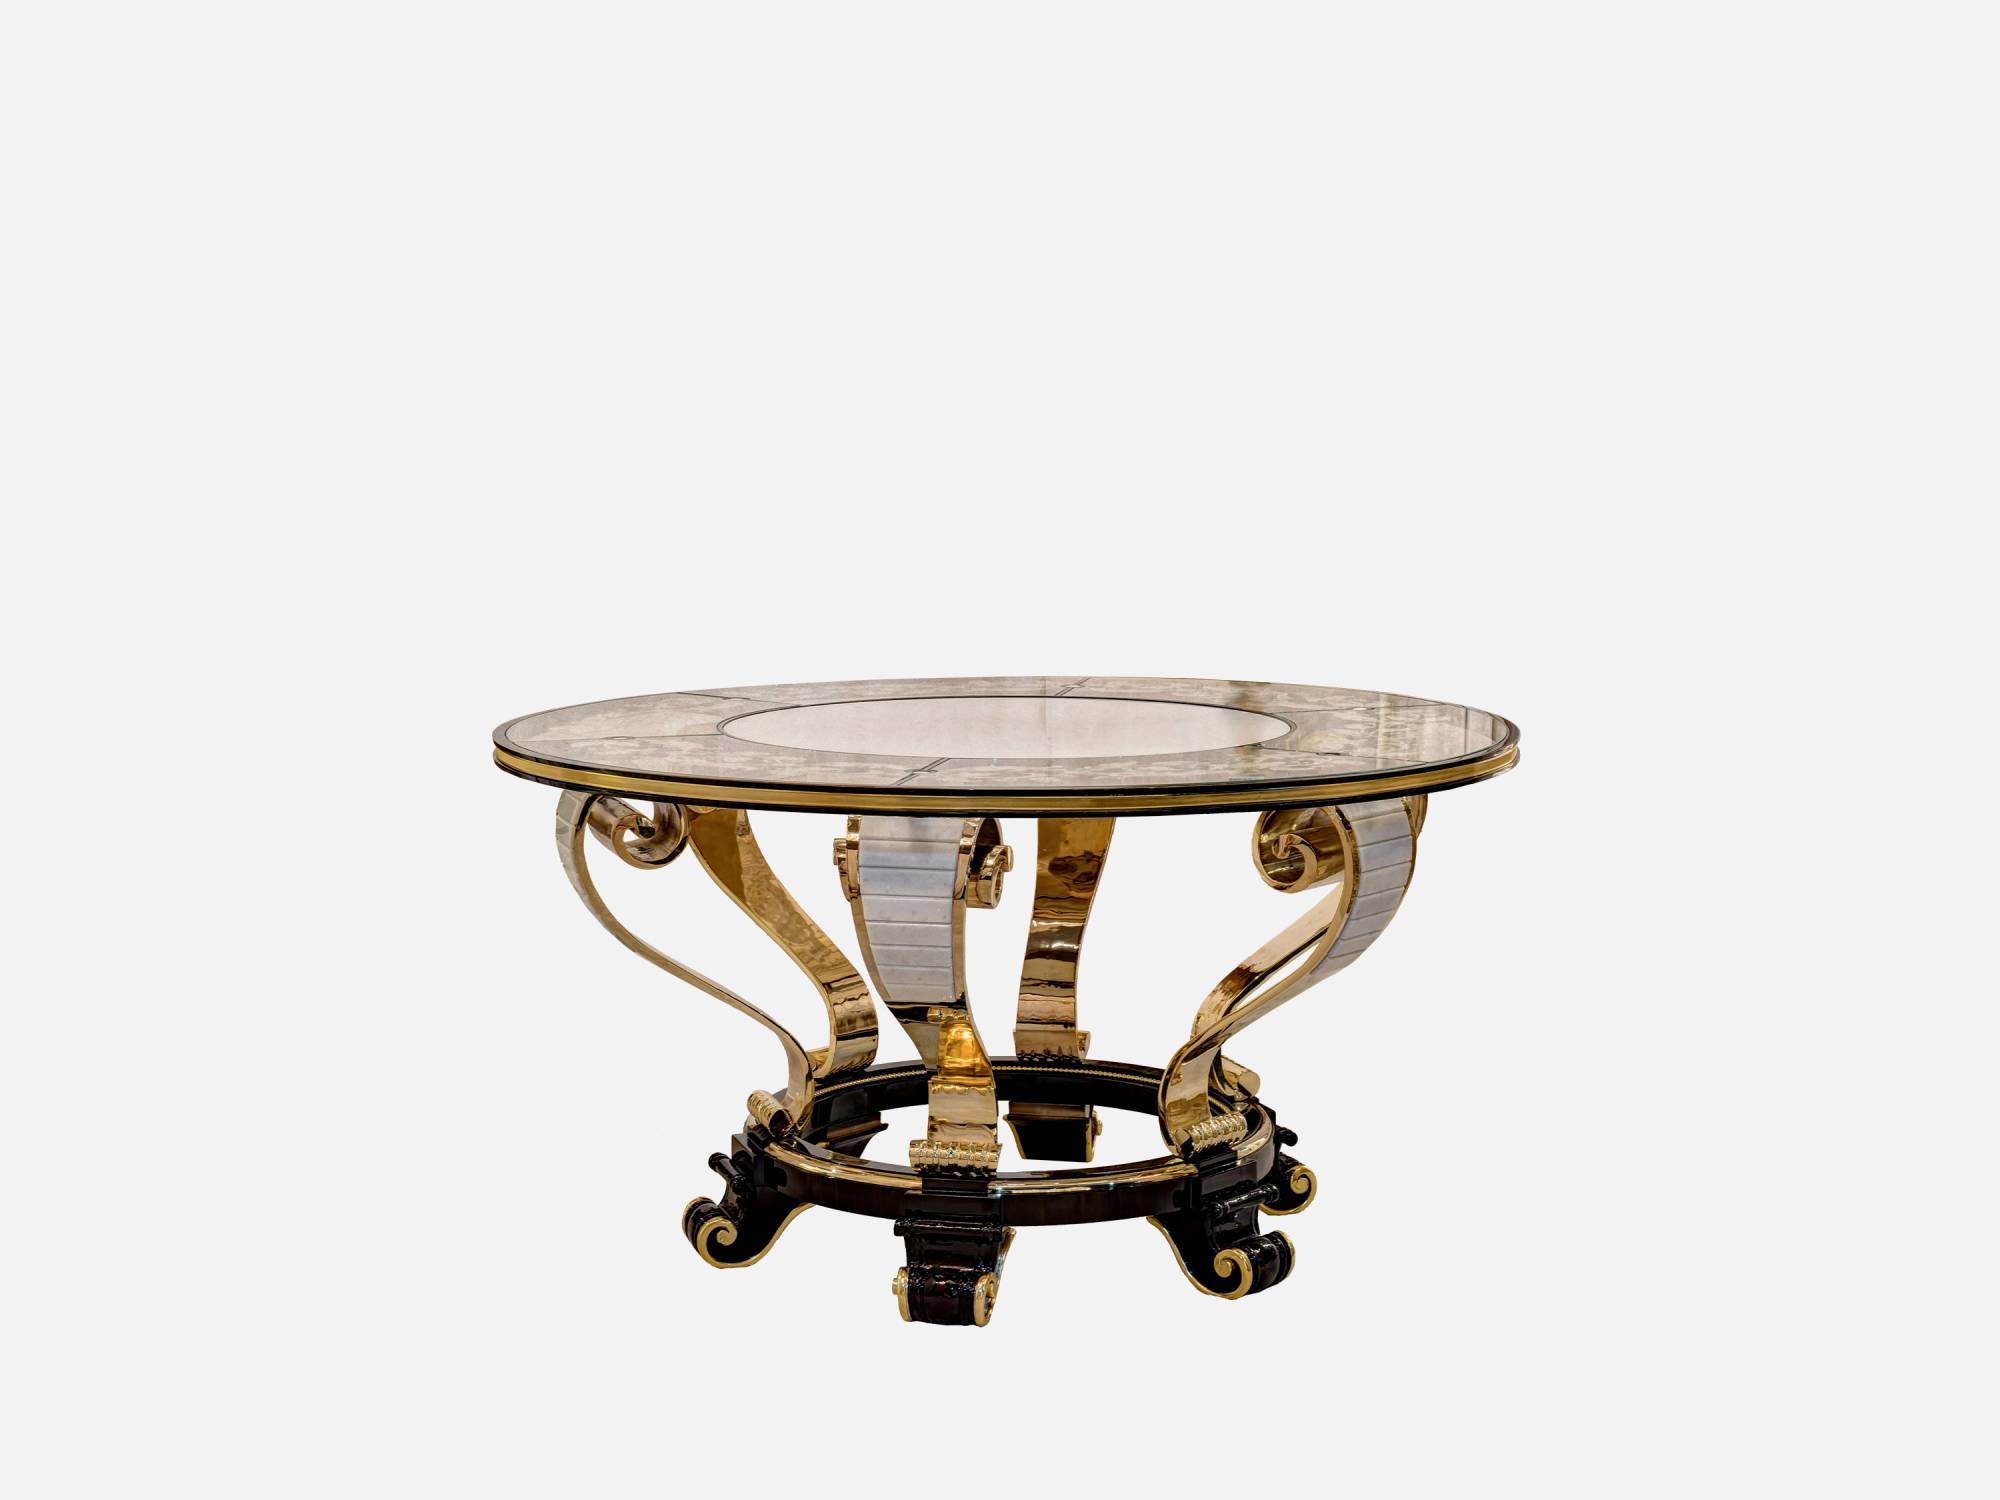 ART. 2084 – C.G. Capelletti Italian Luxury Classic Tables. Made in Italy classic interior design